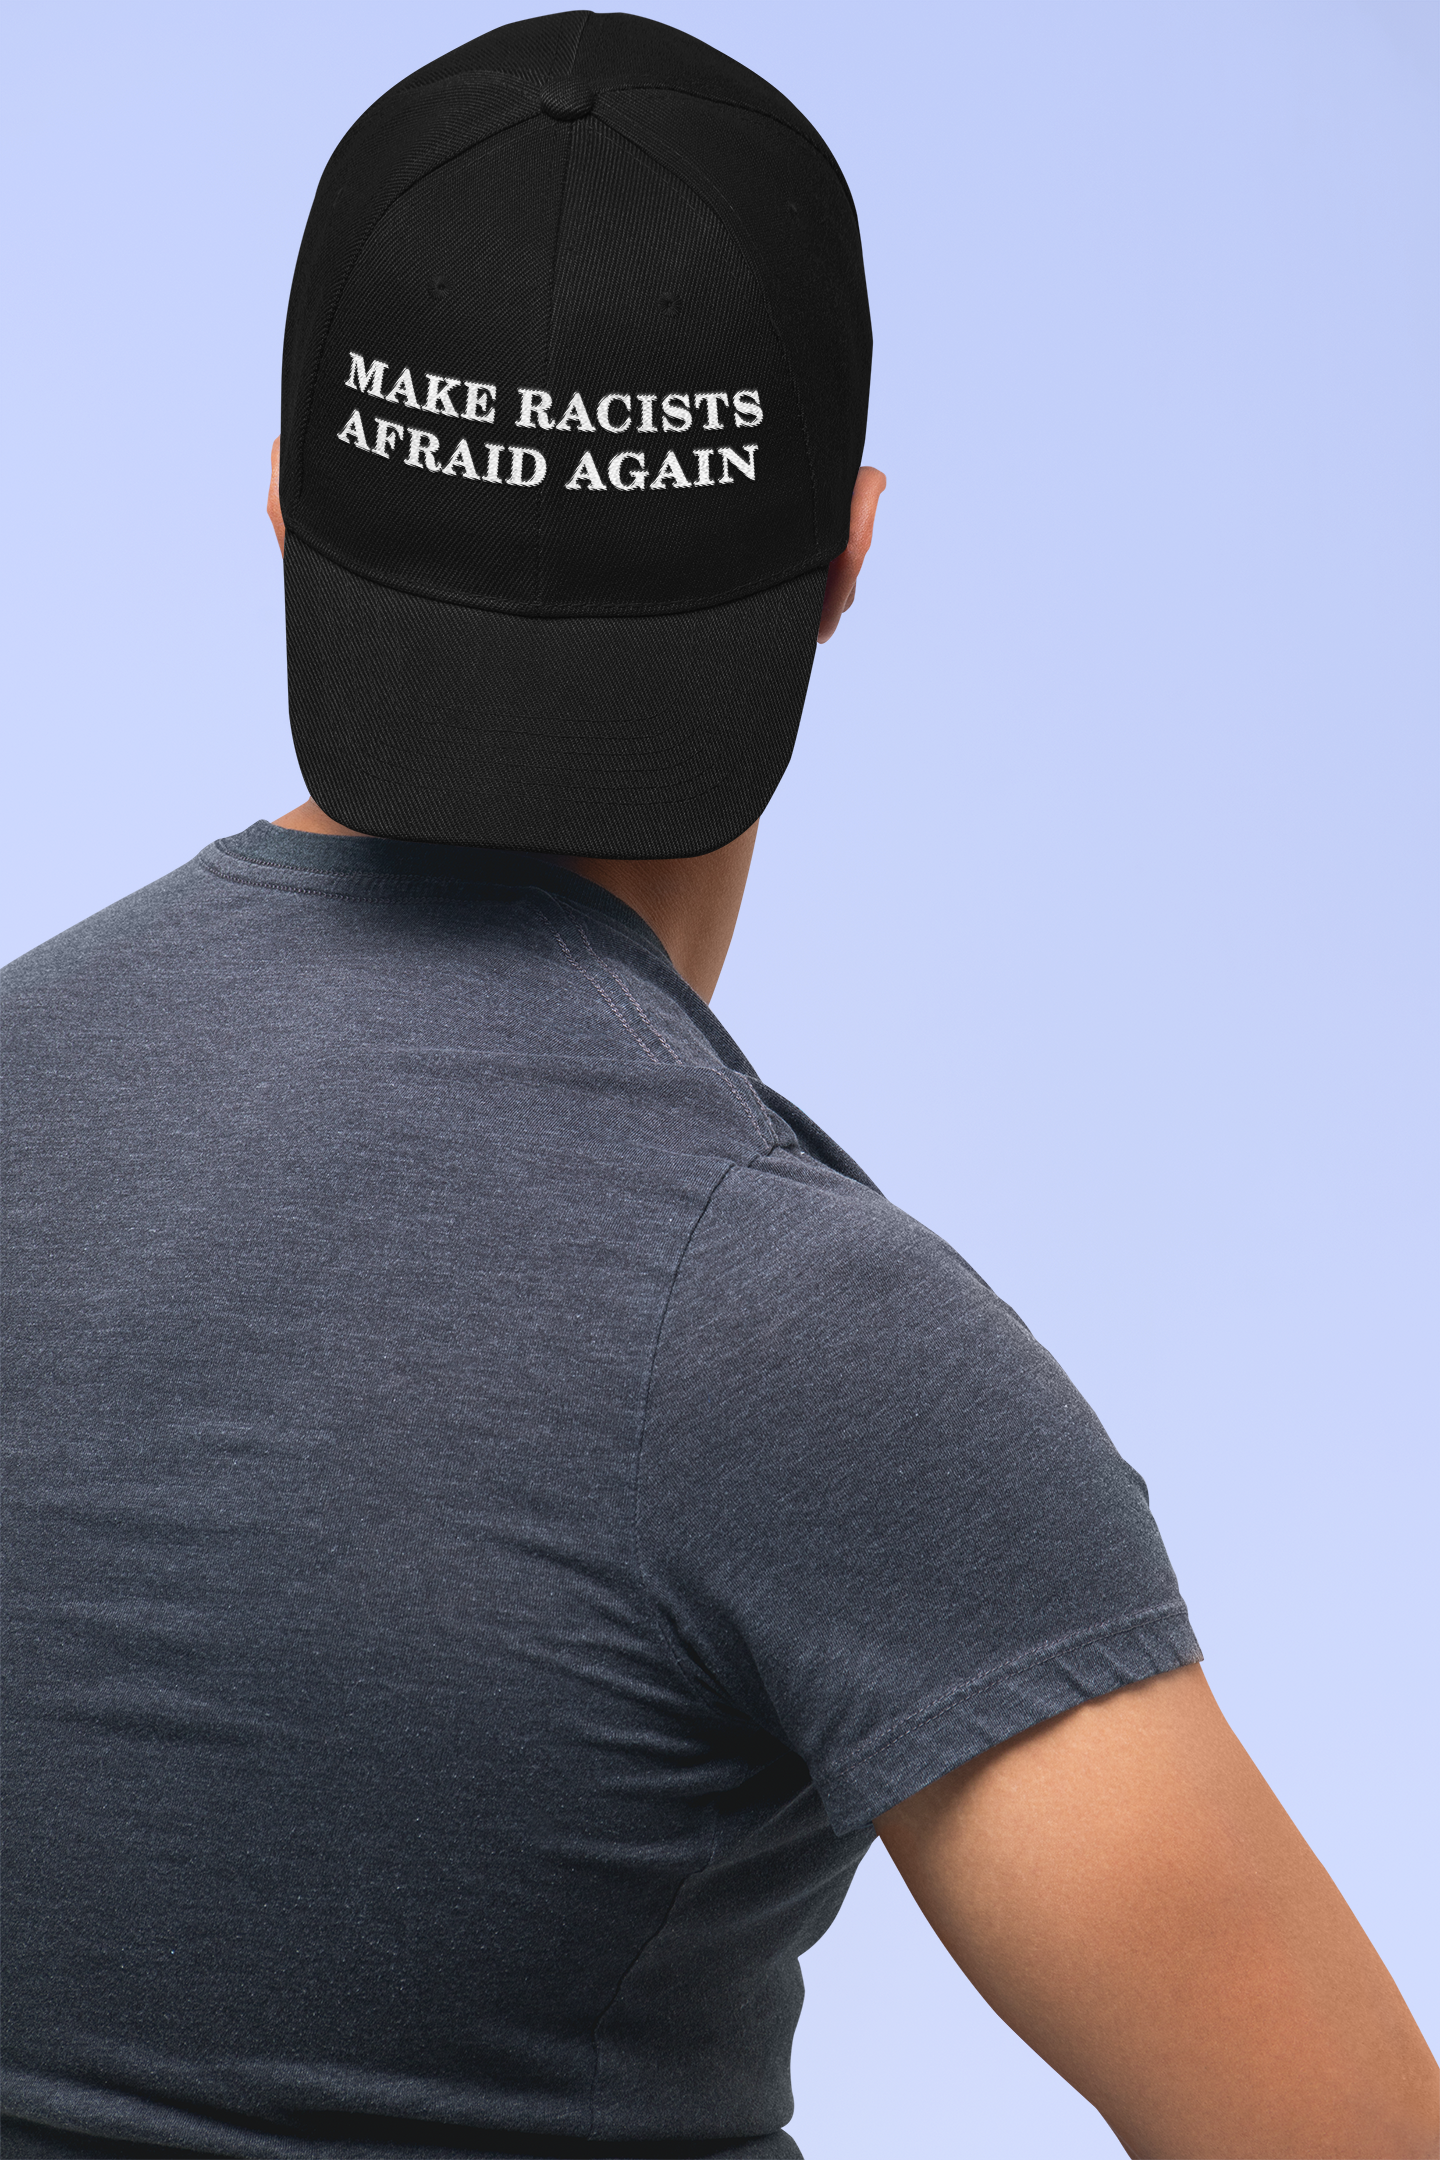 racist afraid maga hat blm black lives matter 